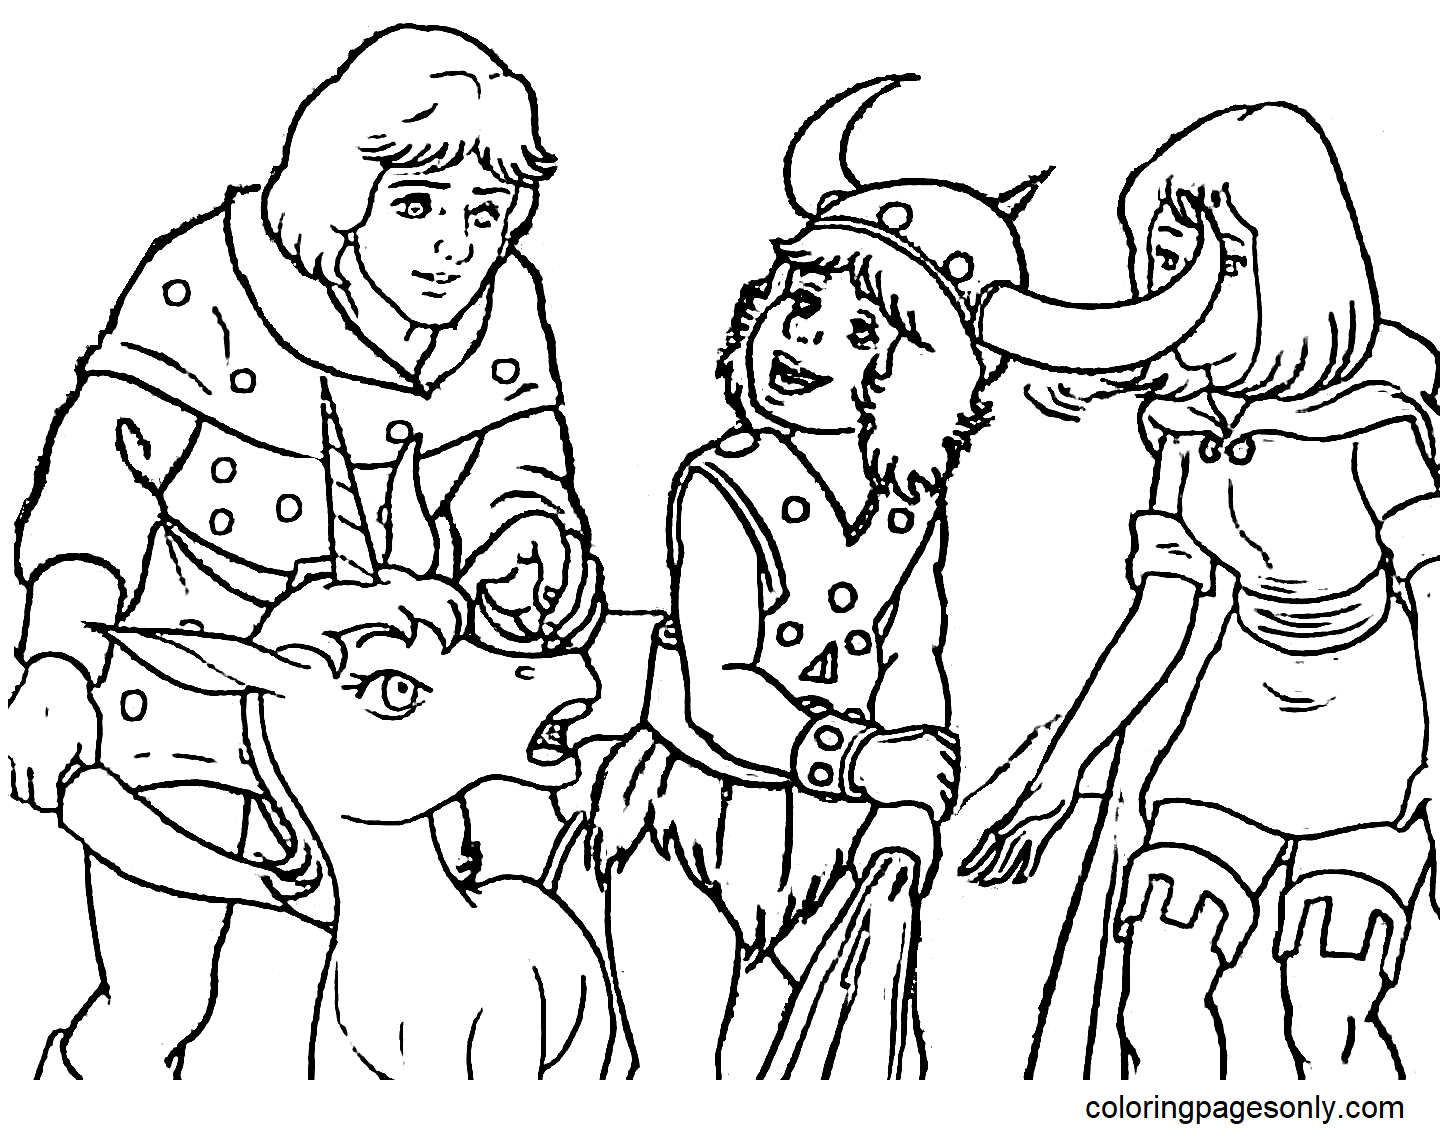 Hank, o Ranger, Bobby, o Bárbaro, Sheila, a Ladra e Uni, o Unicórnio de Dungeons & Dragons